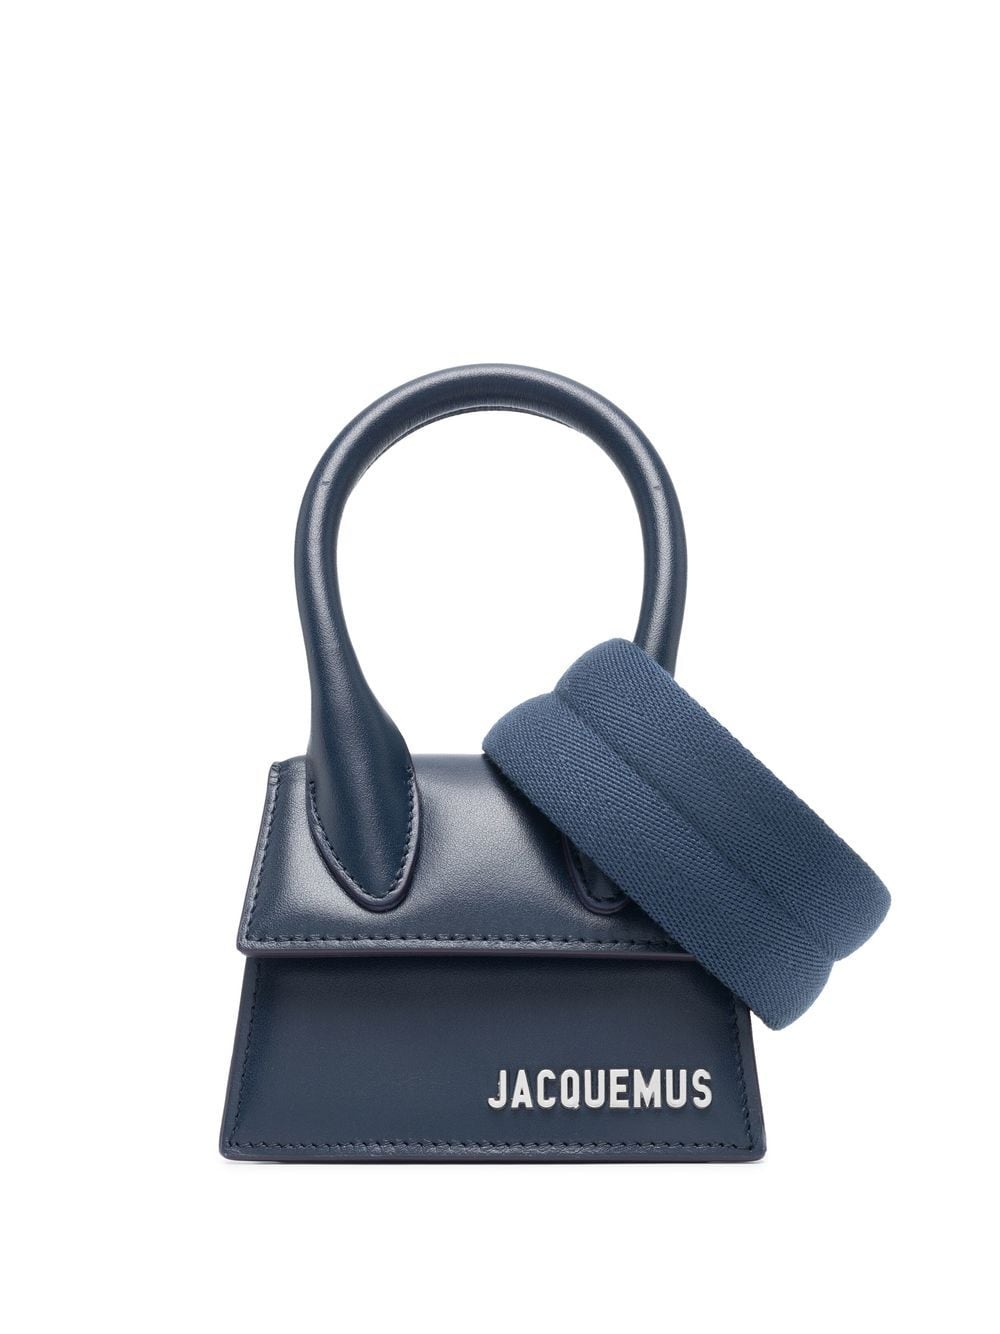 Jacquemus Le Chiquito Homme crossbody bag - Blue von Jacquemus